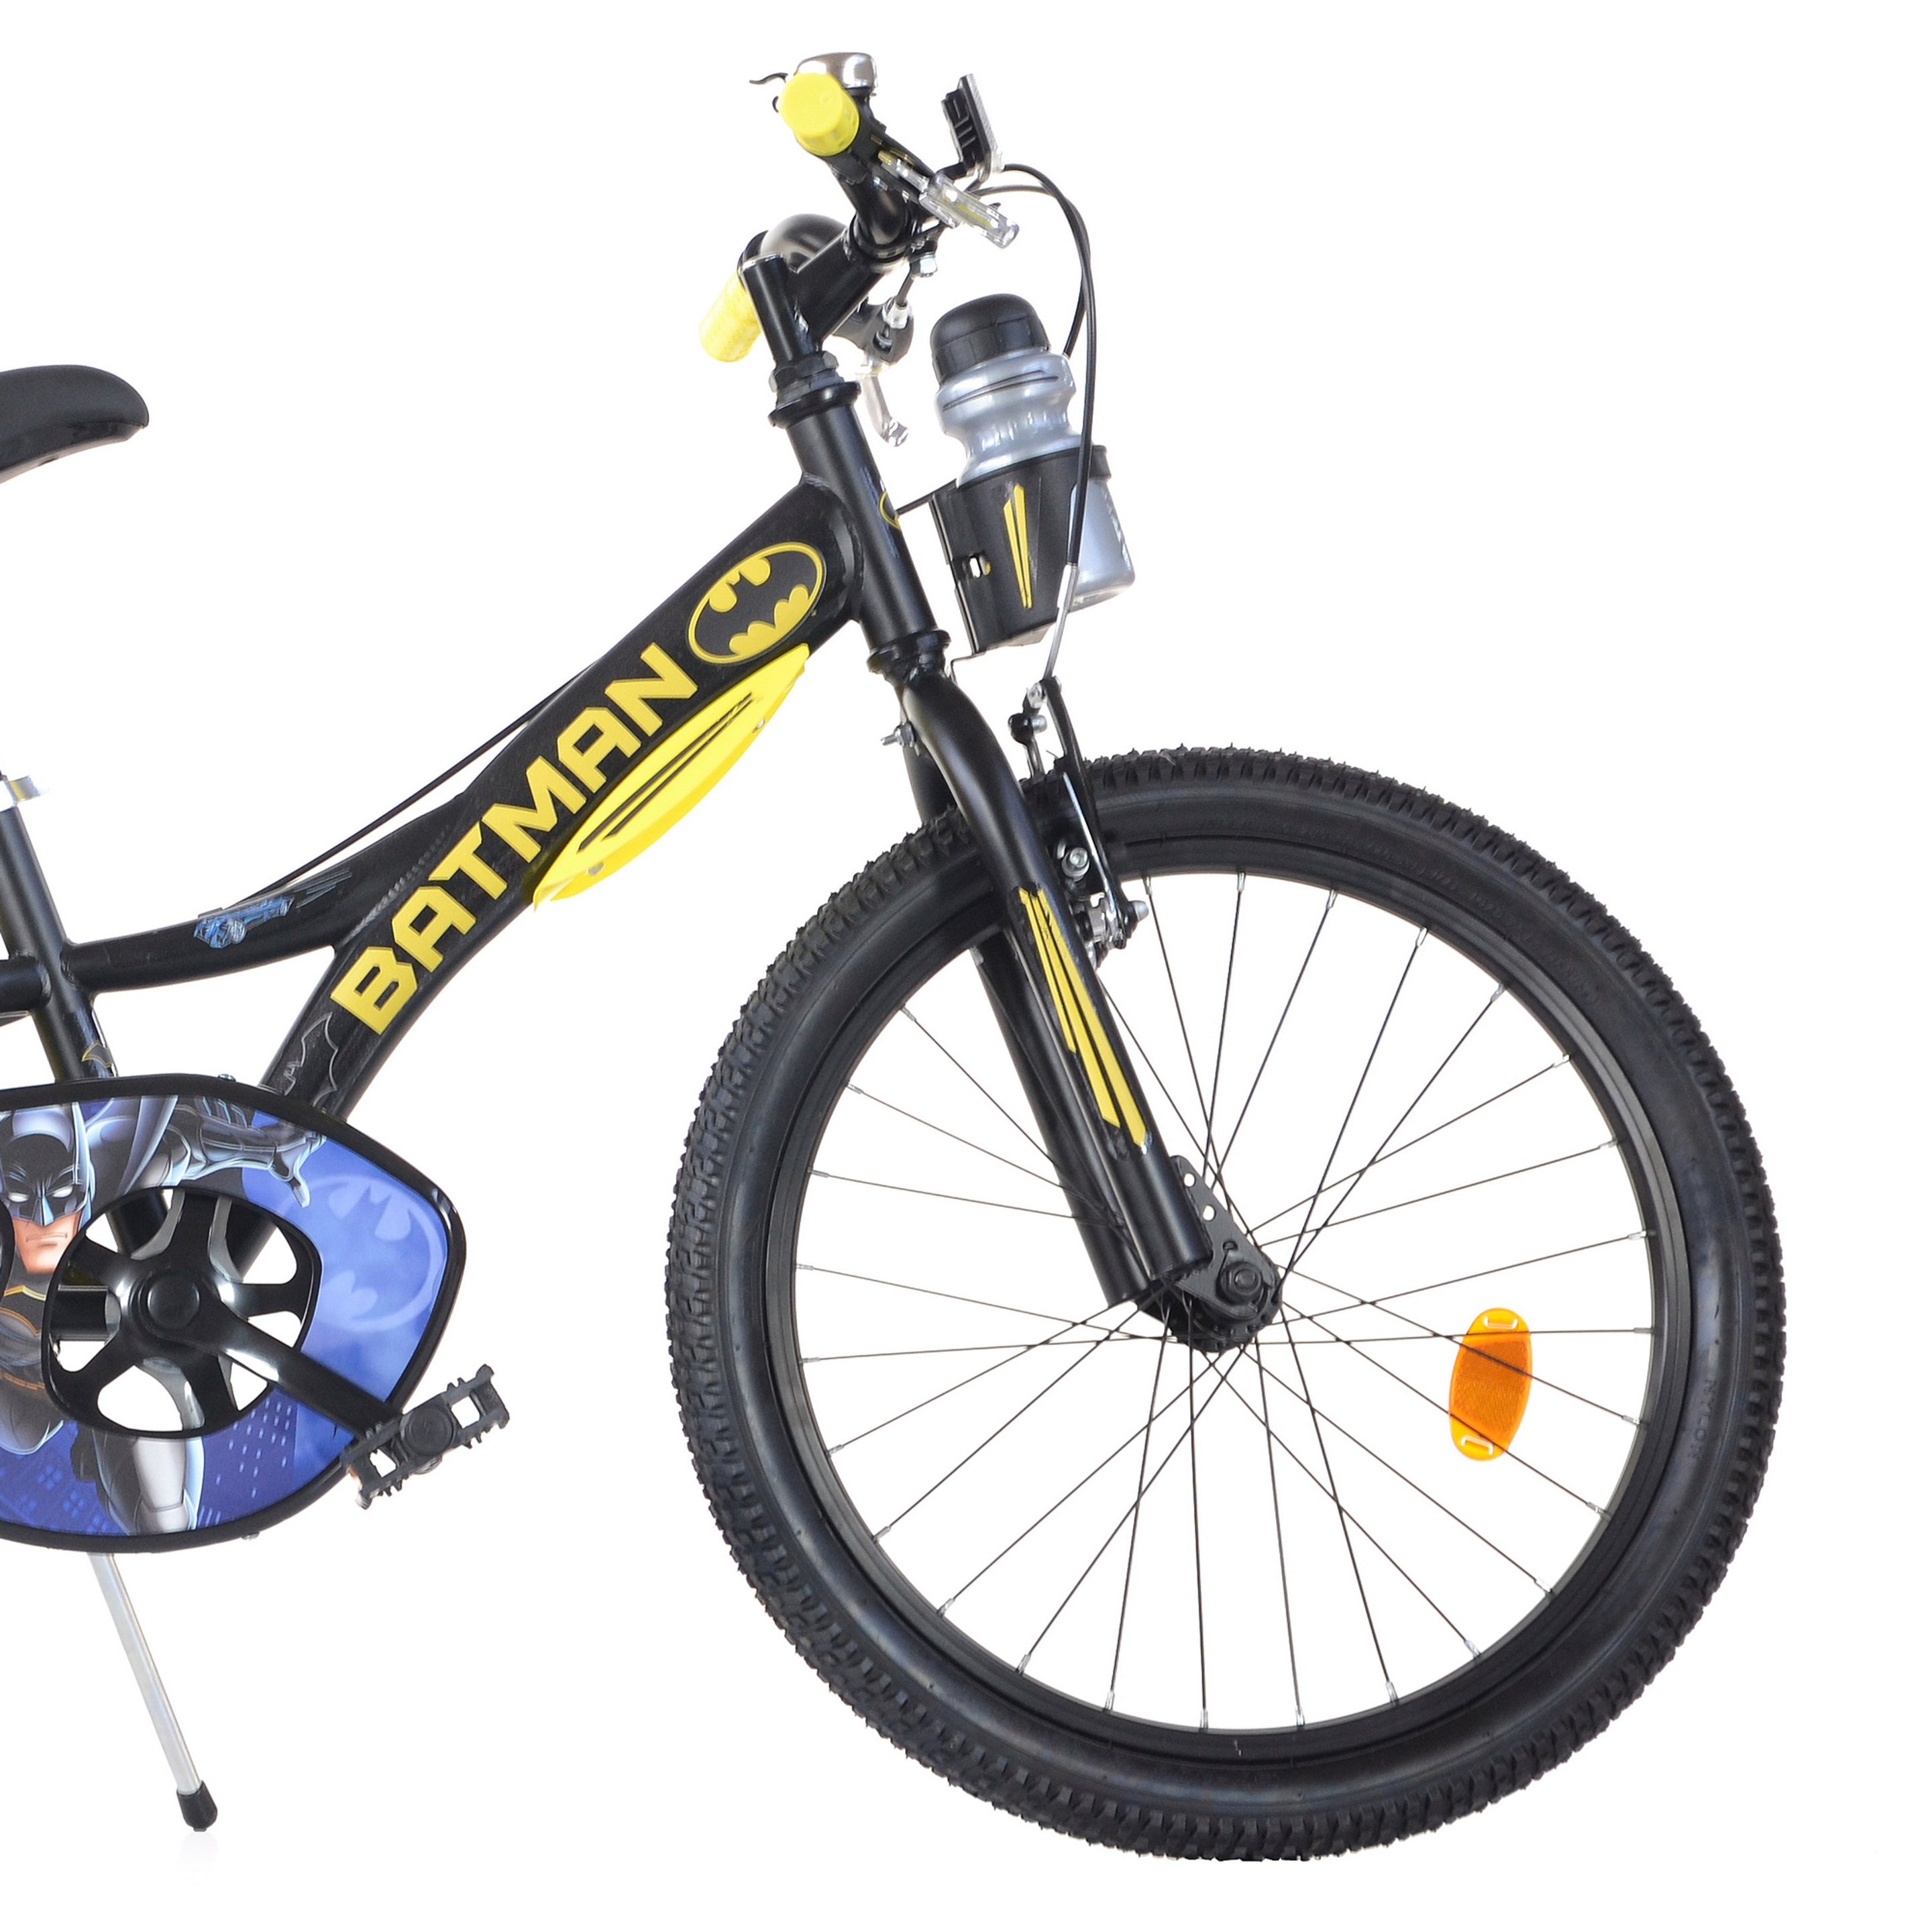 Bicicleta Infantil Batman 20 Pulgadas +7 Años